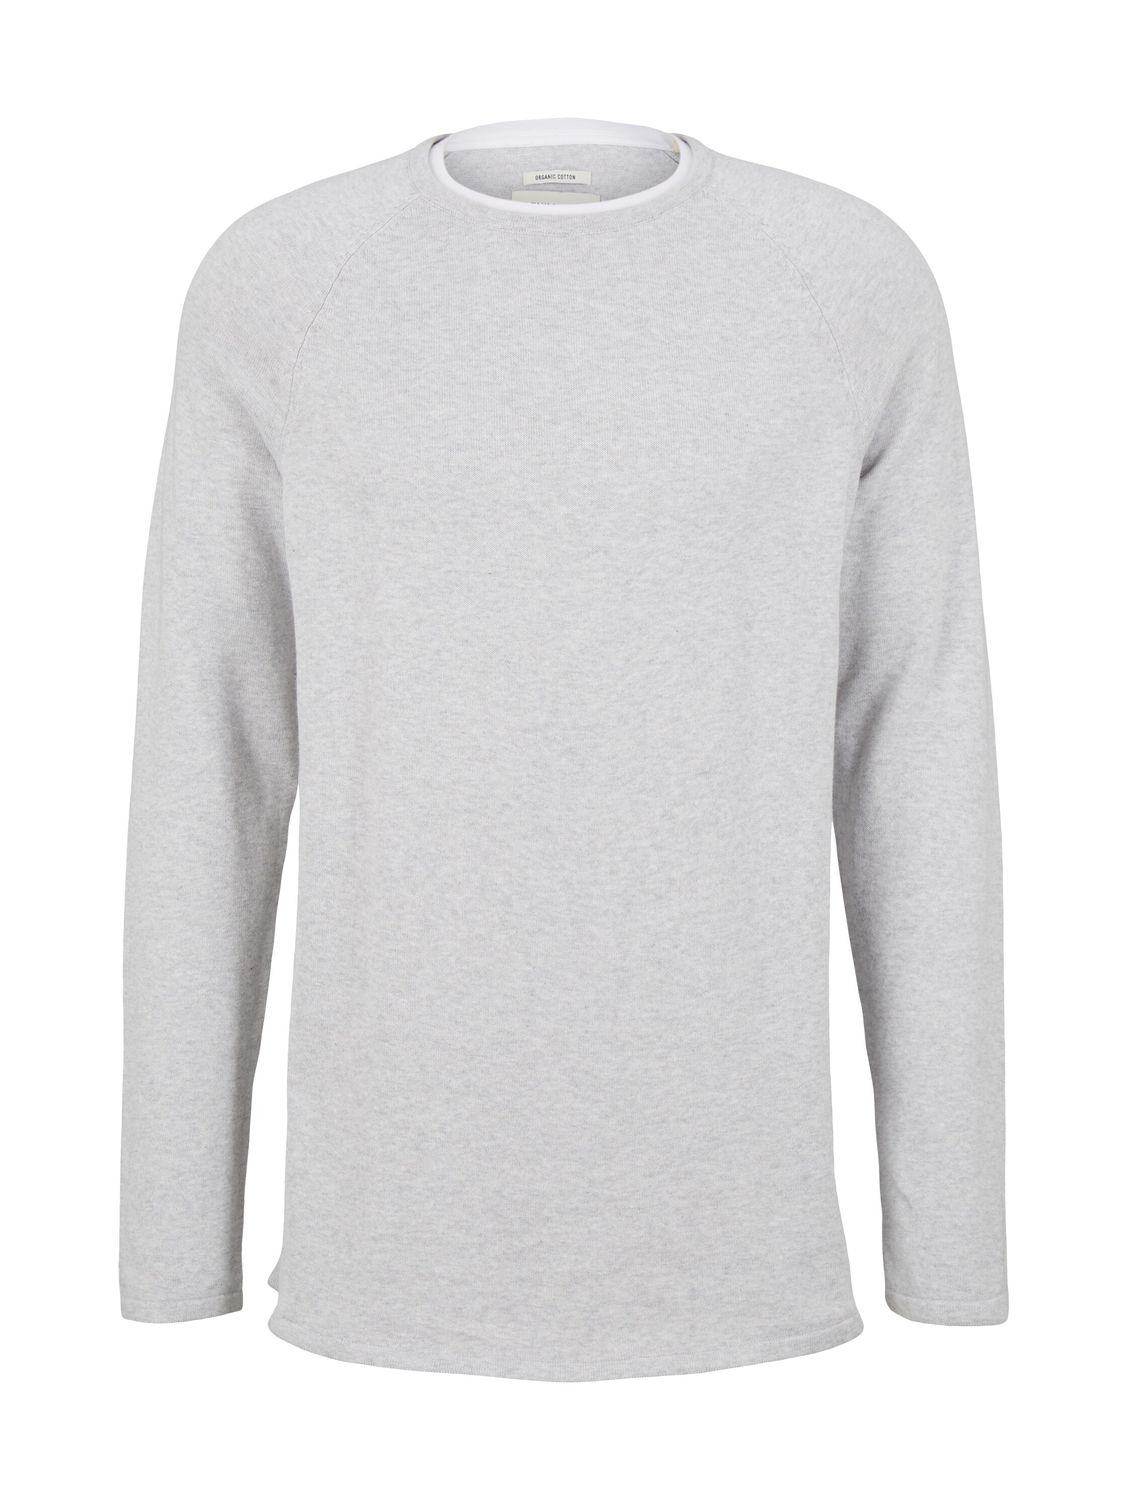 Пуловер TOM TAILOR Denim BASIC, серый толстовка tom tailor размер s серый